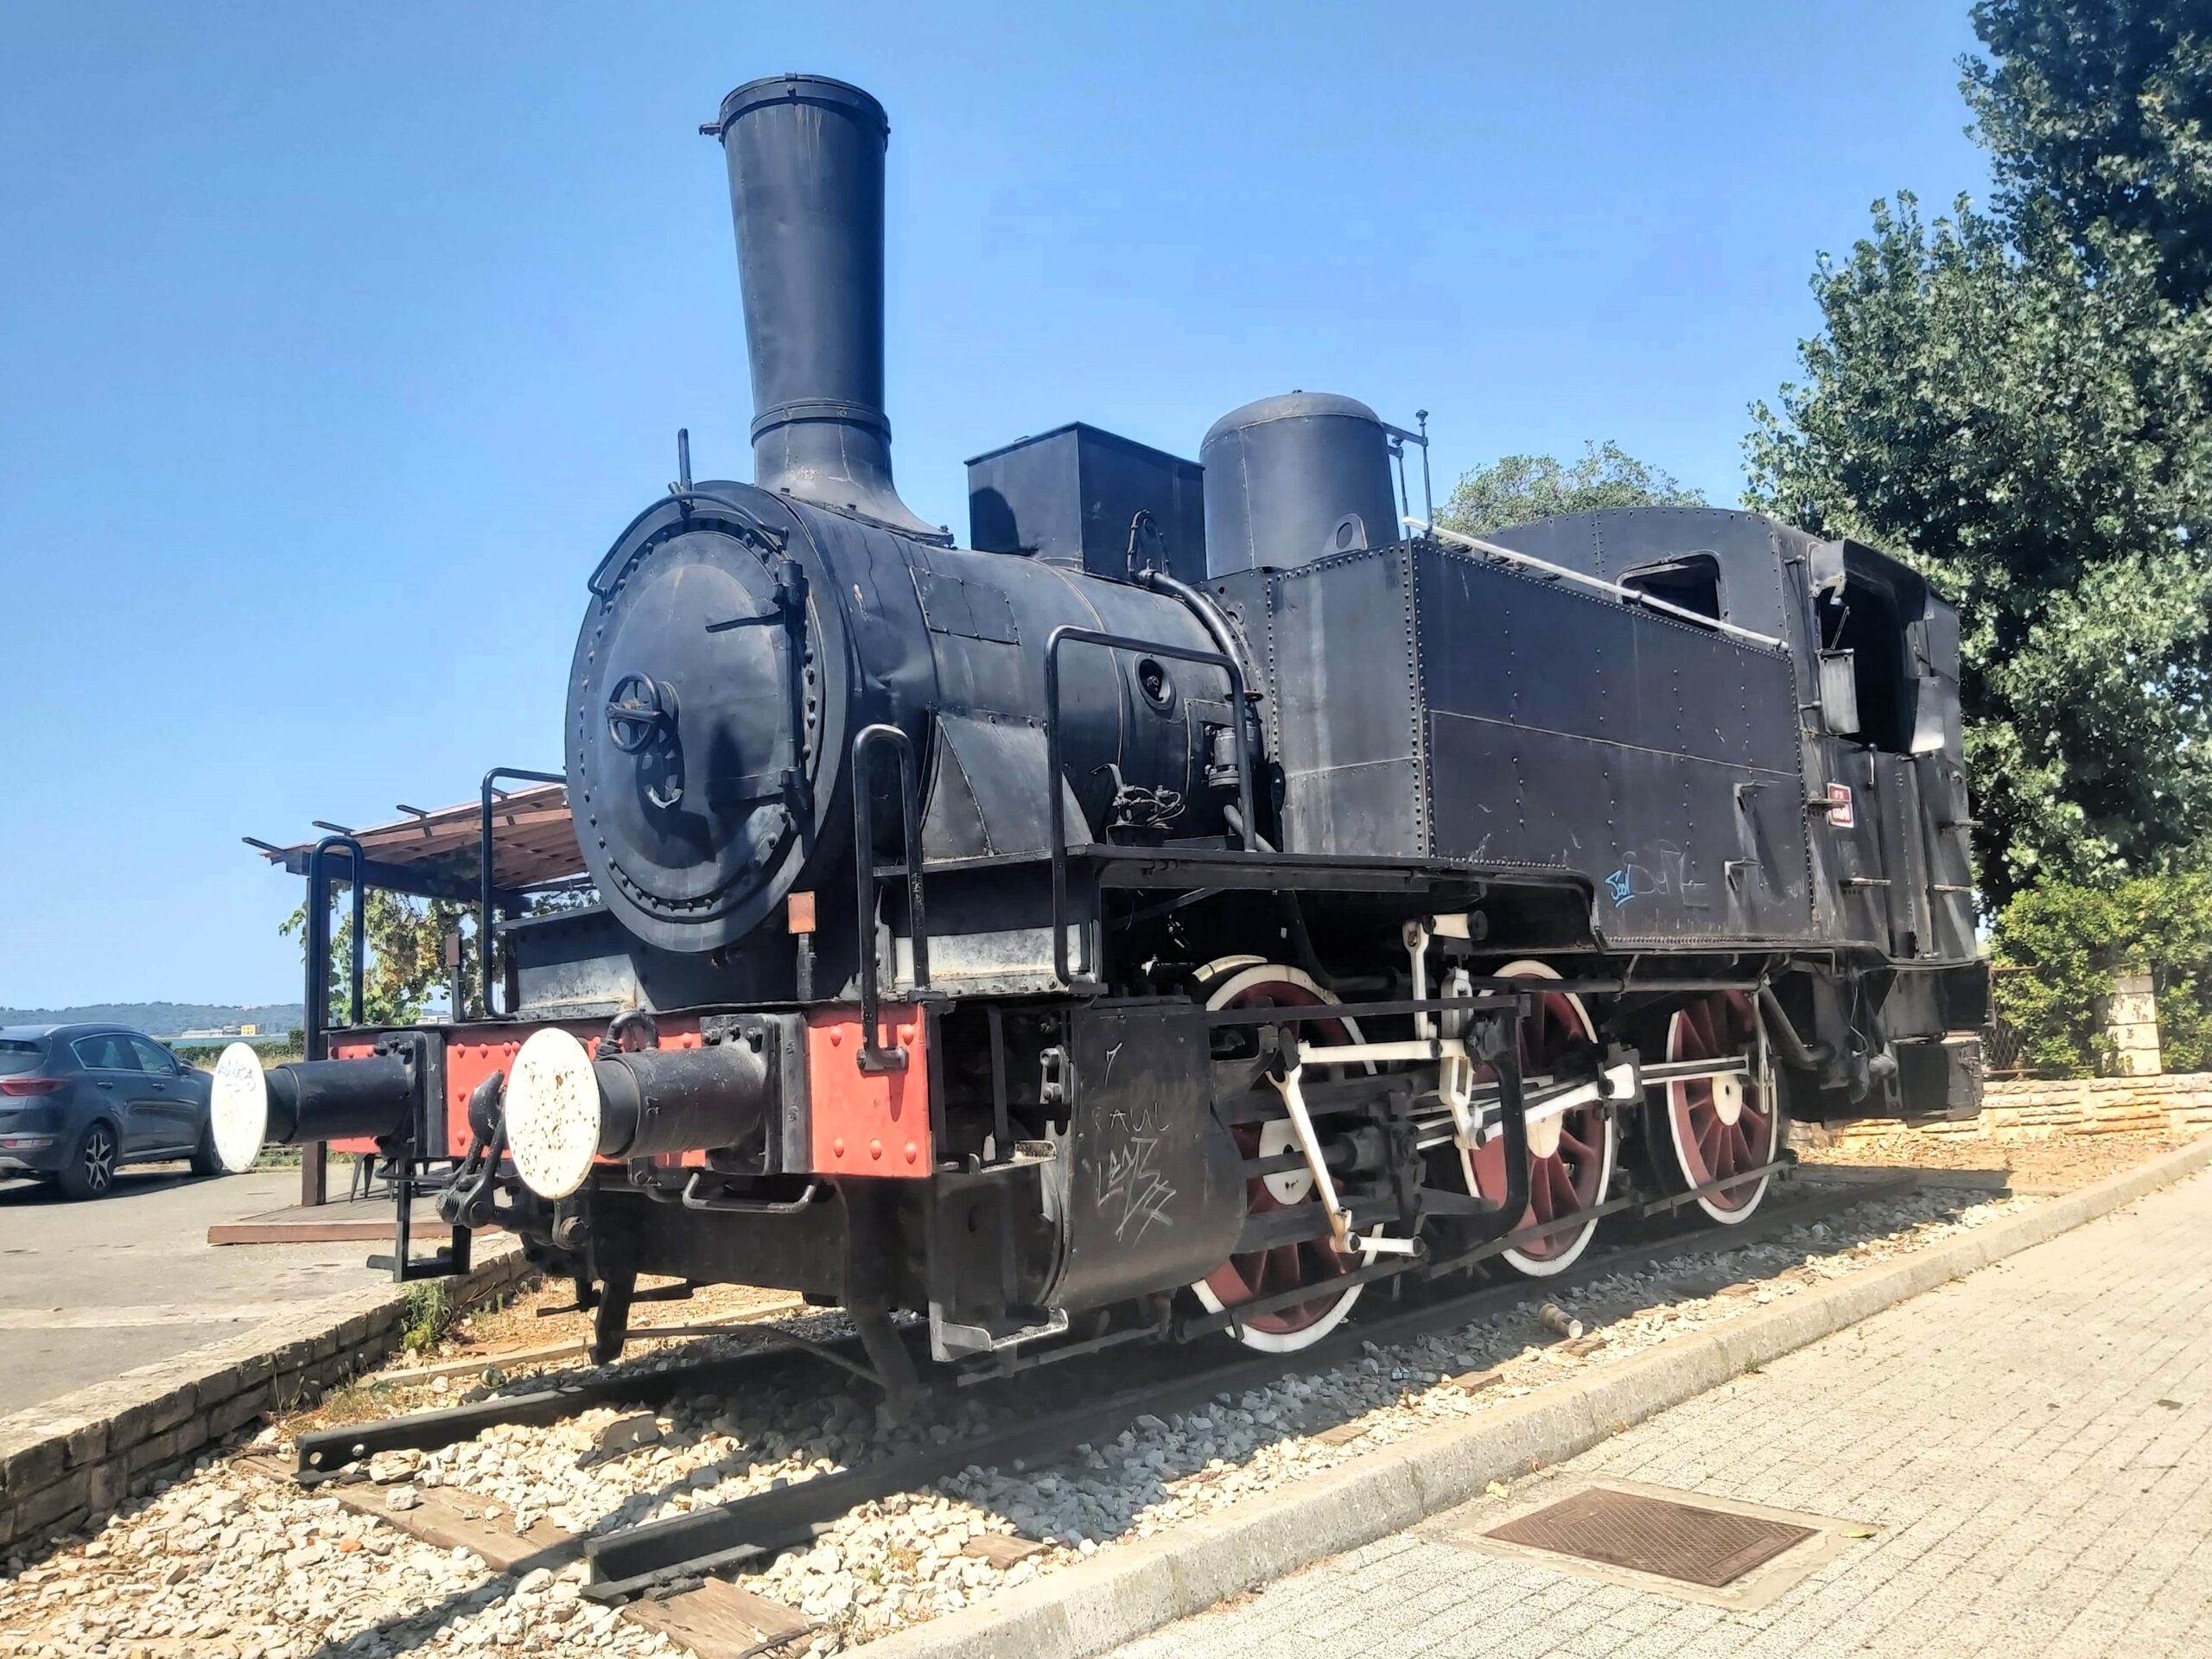 Black steam engine outside Pula train station, Croatia